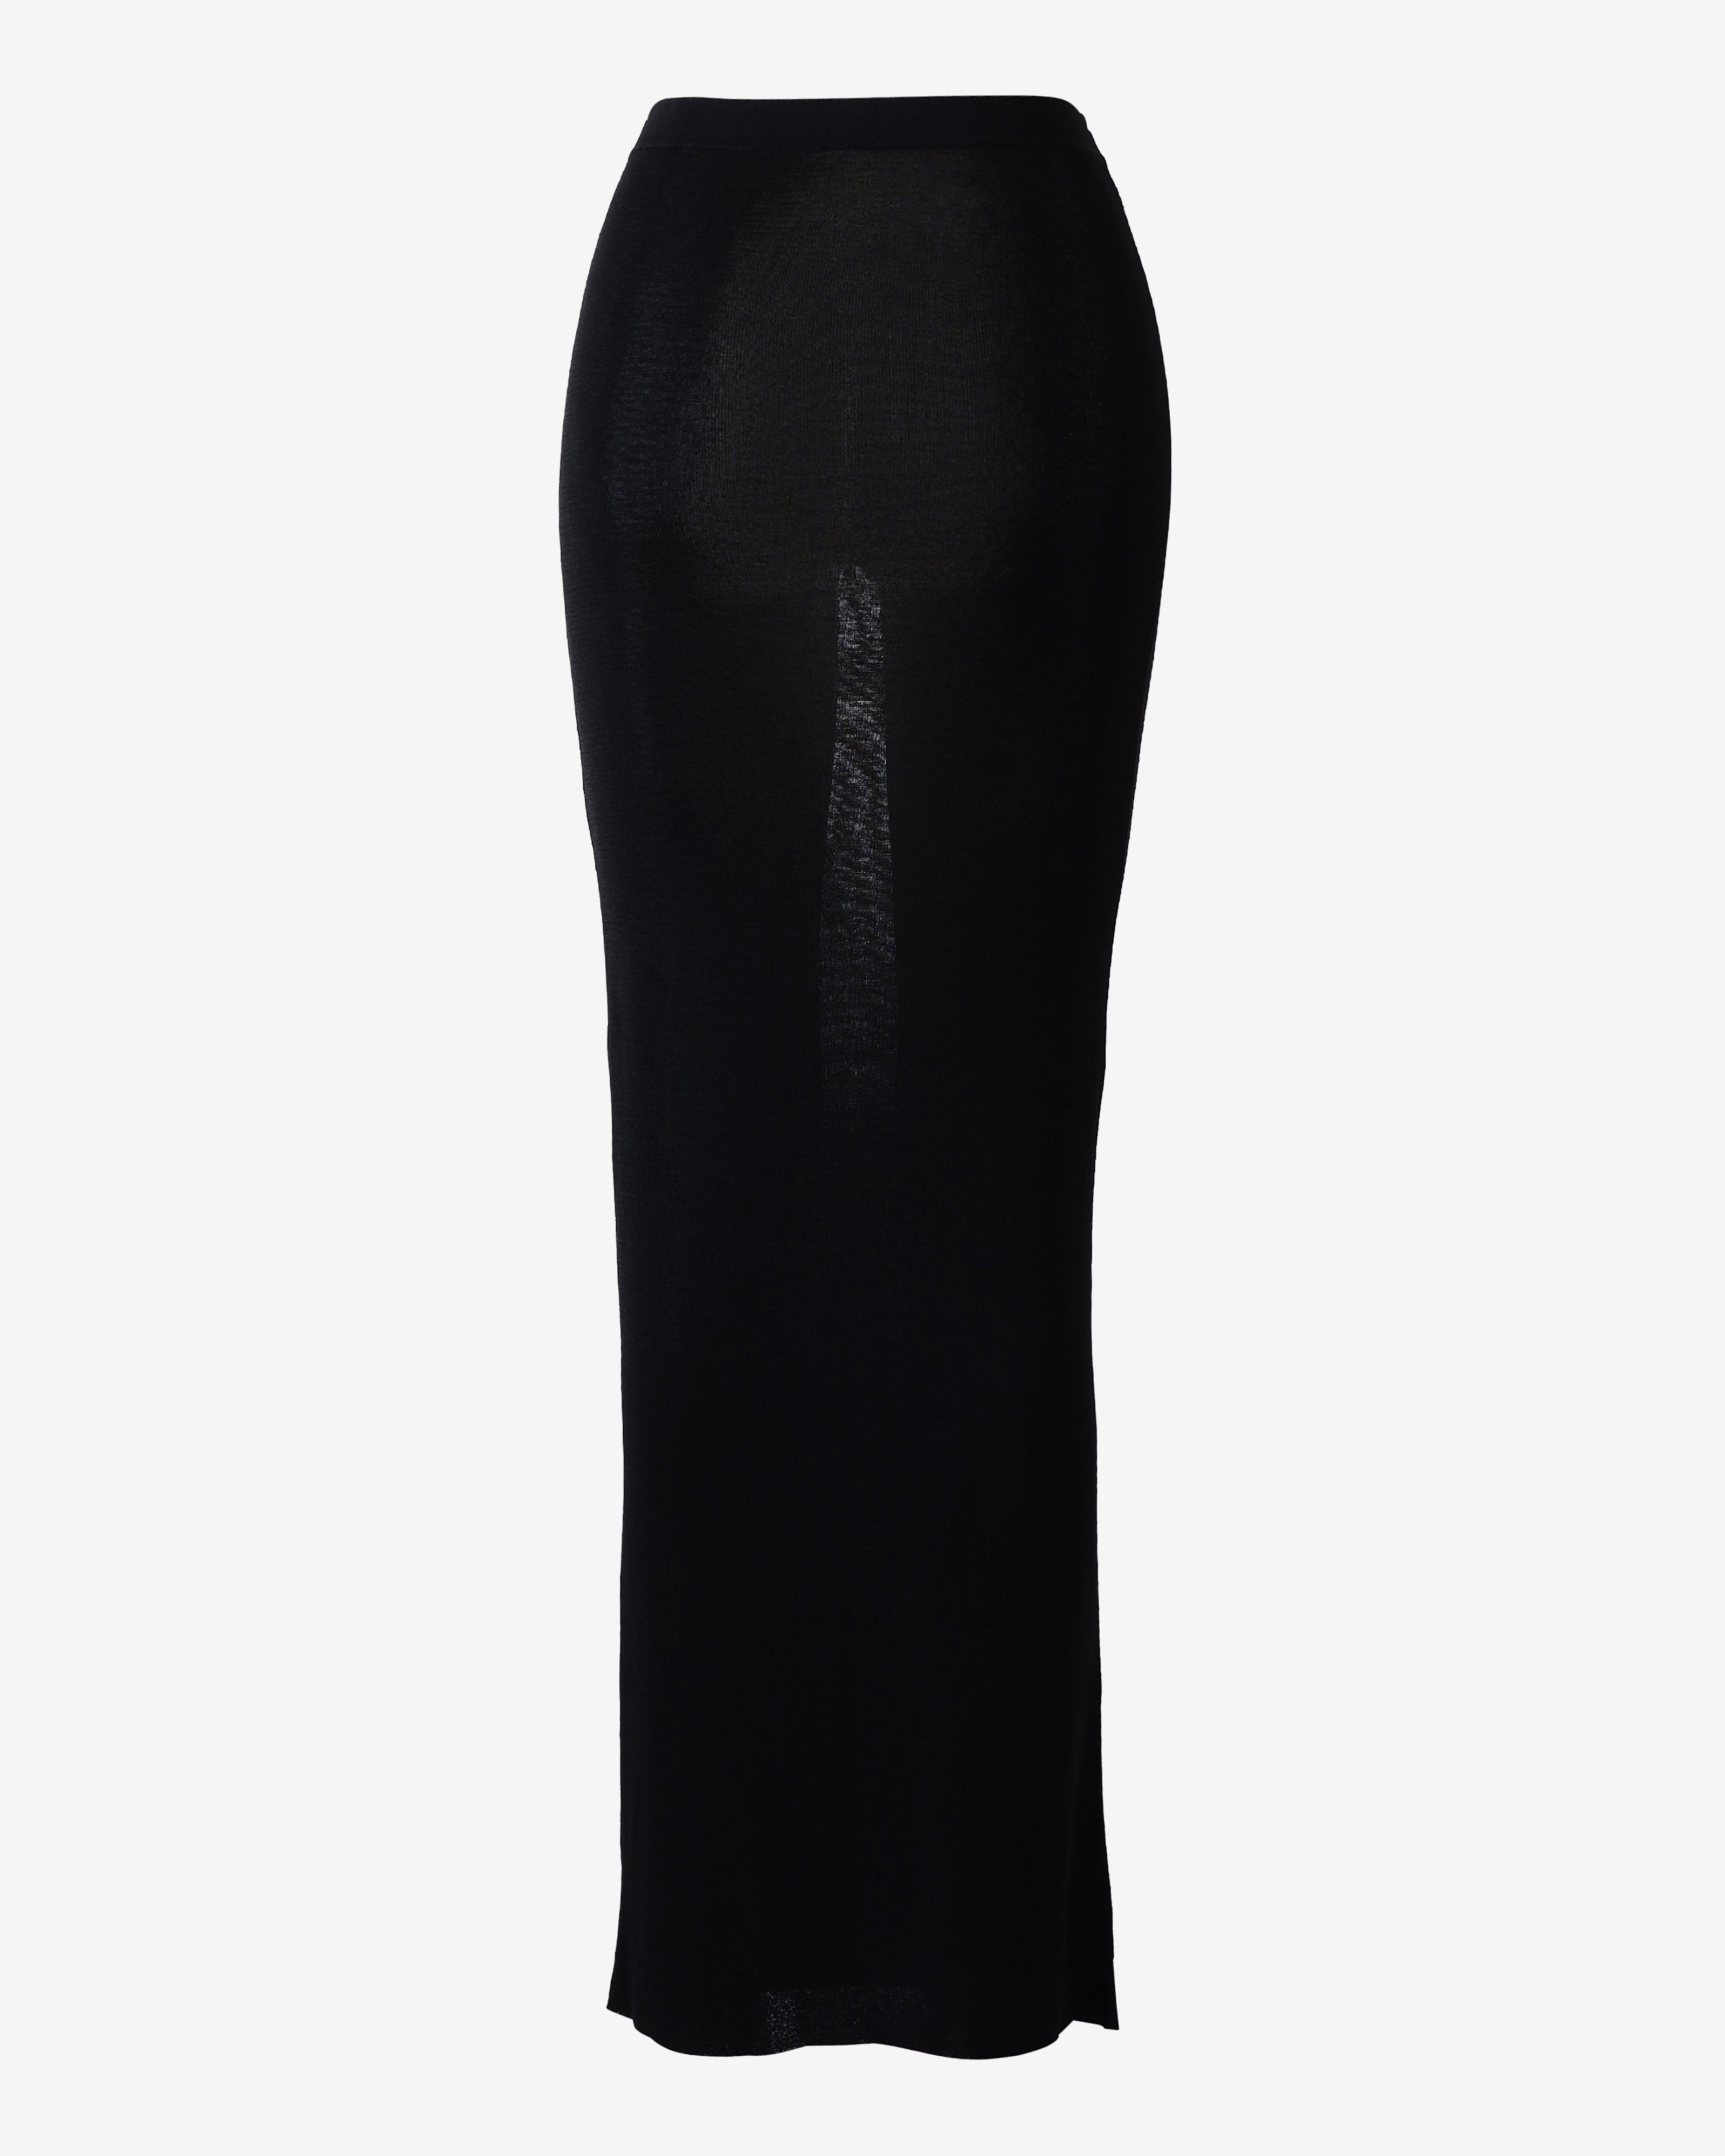 sener-besim-the-long-knit-skirt-black-knitwear